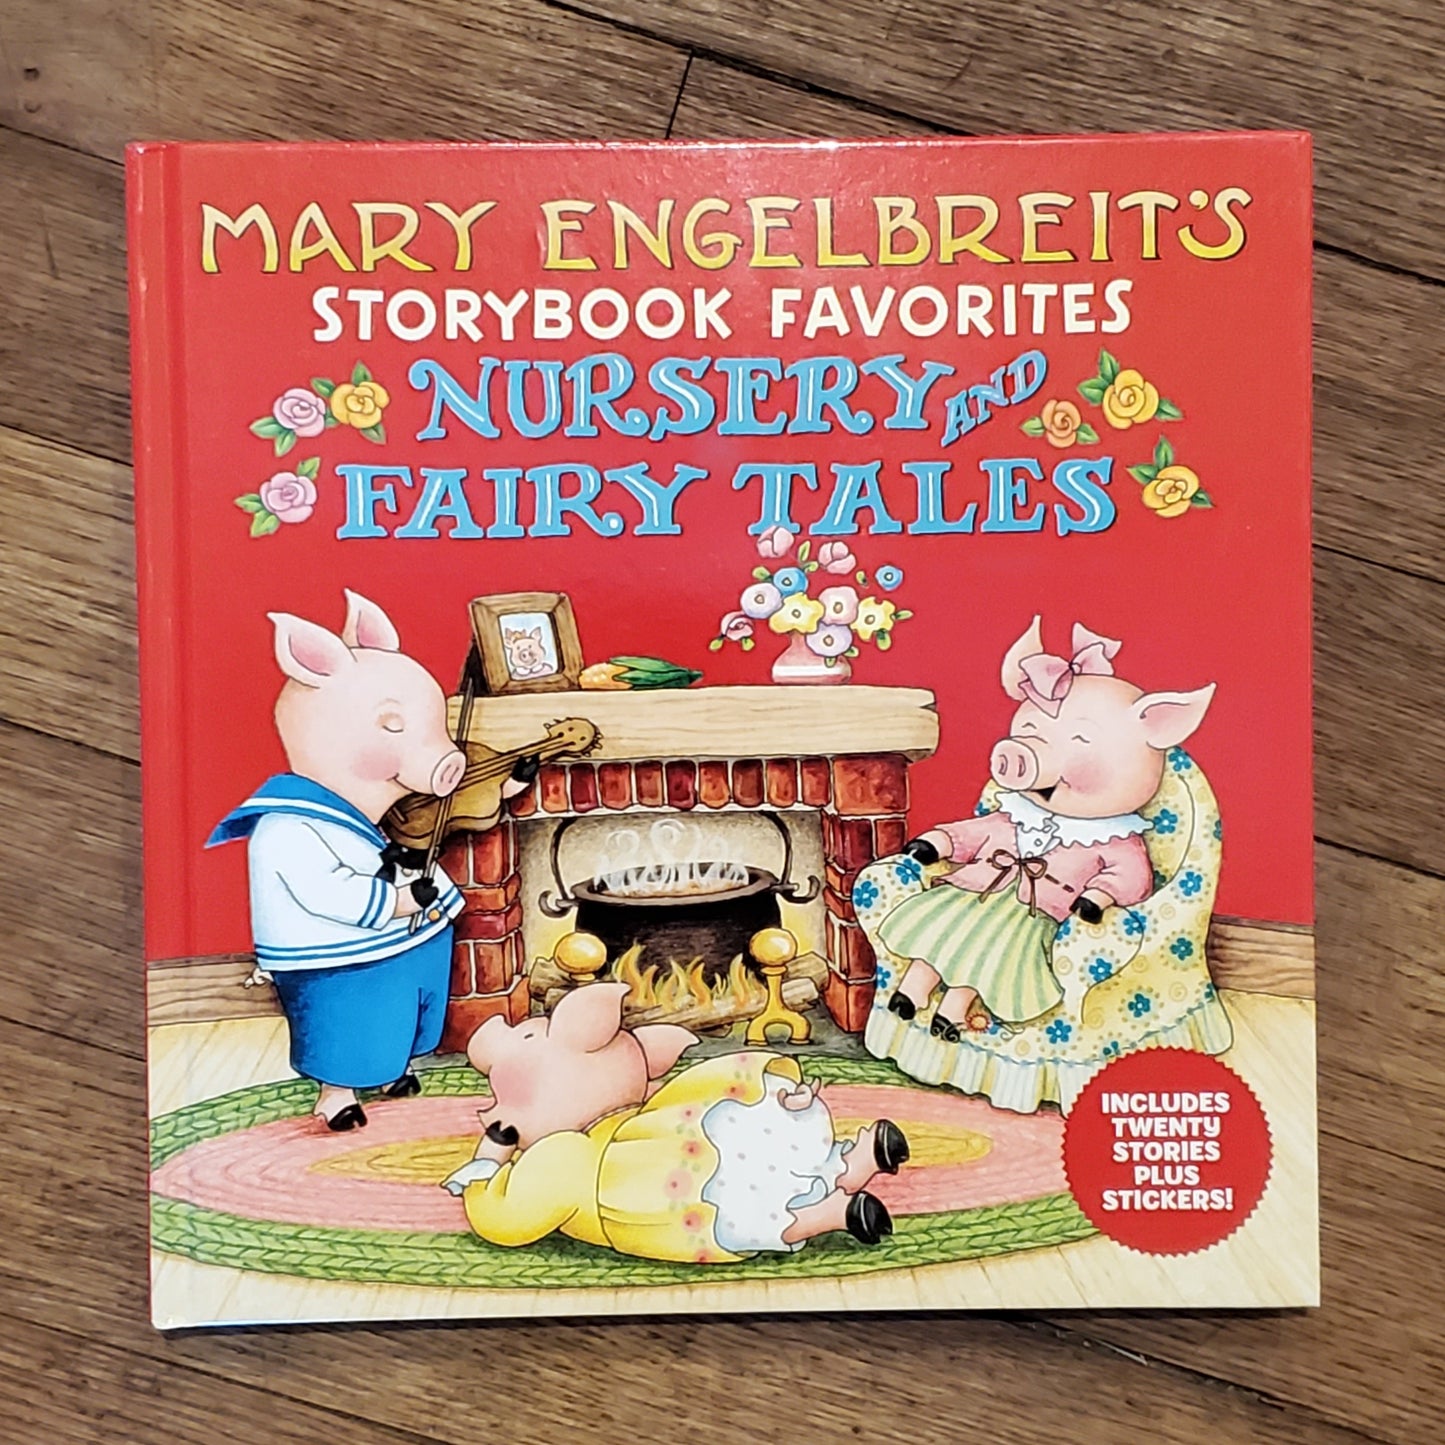 Mary Engelbreit's Storybook Favorites Nursery and Fairy Tales